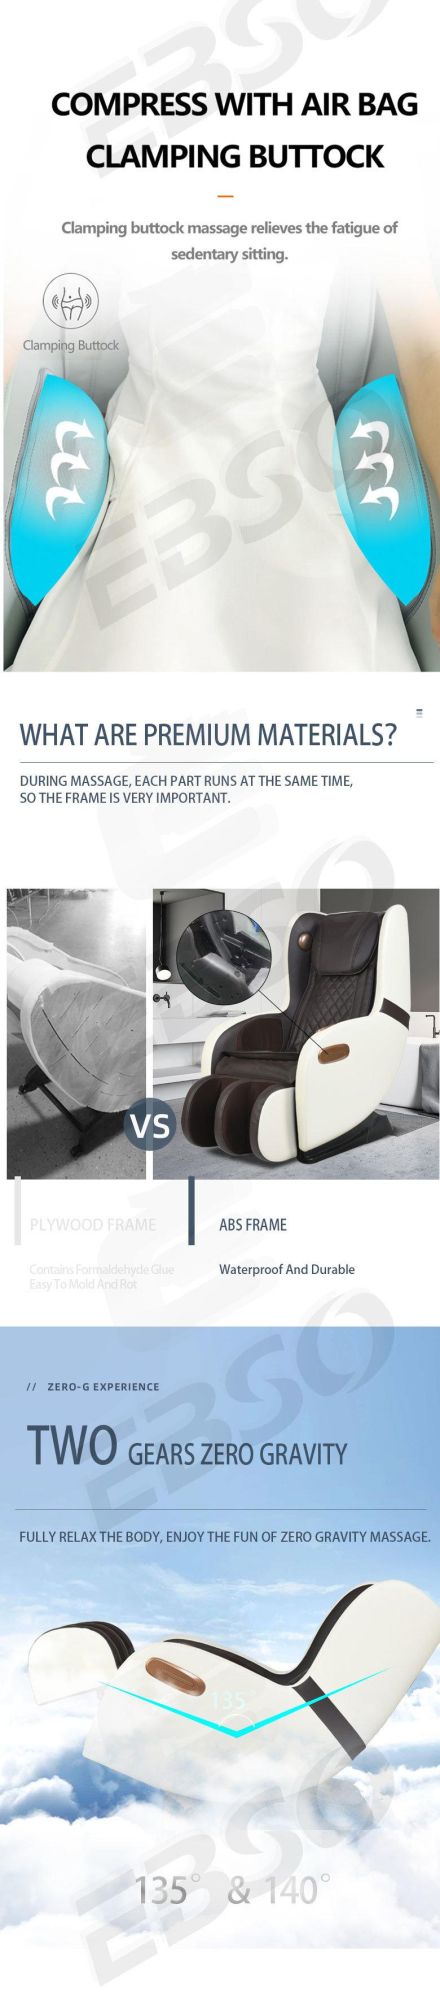 SL Track 3D Full Body Massage Chair Zero Gravity Folding Recliner Zero Gravity Massage Chair